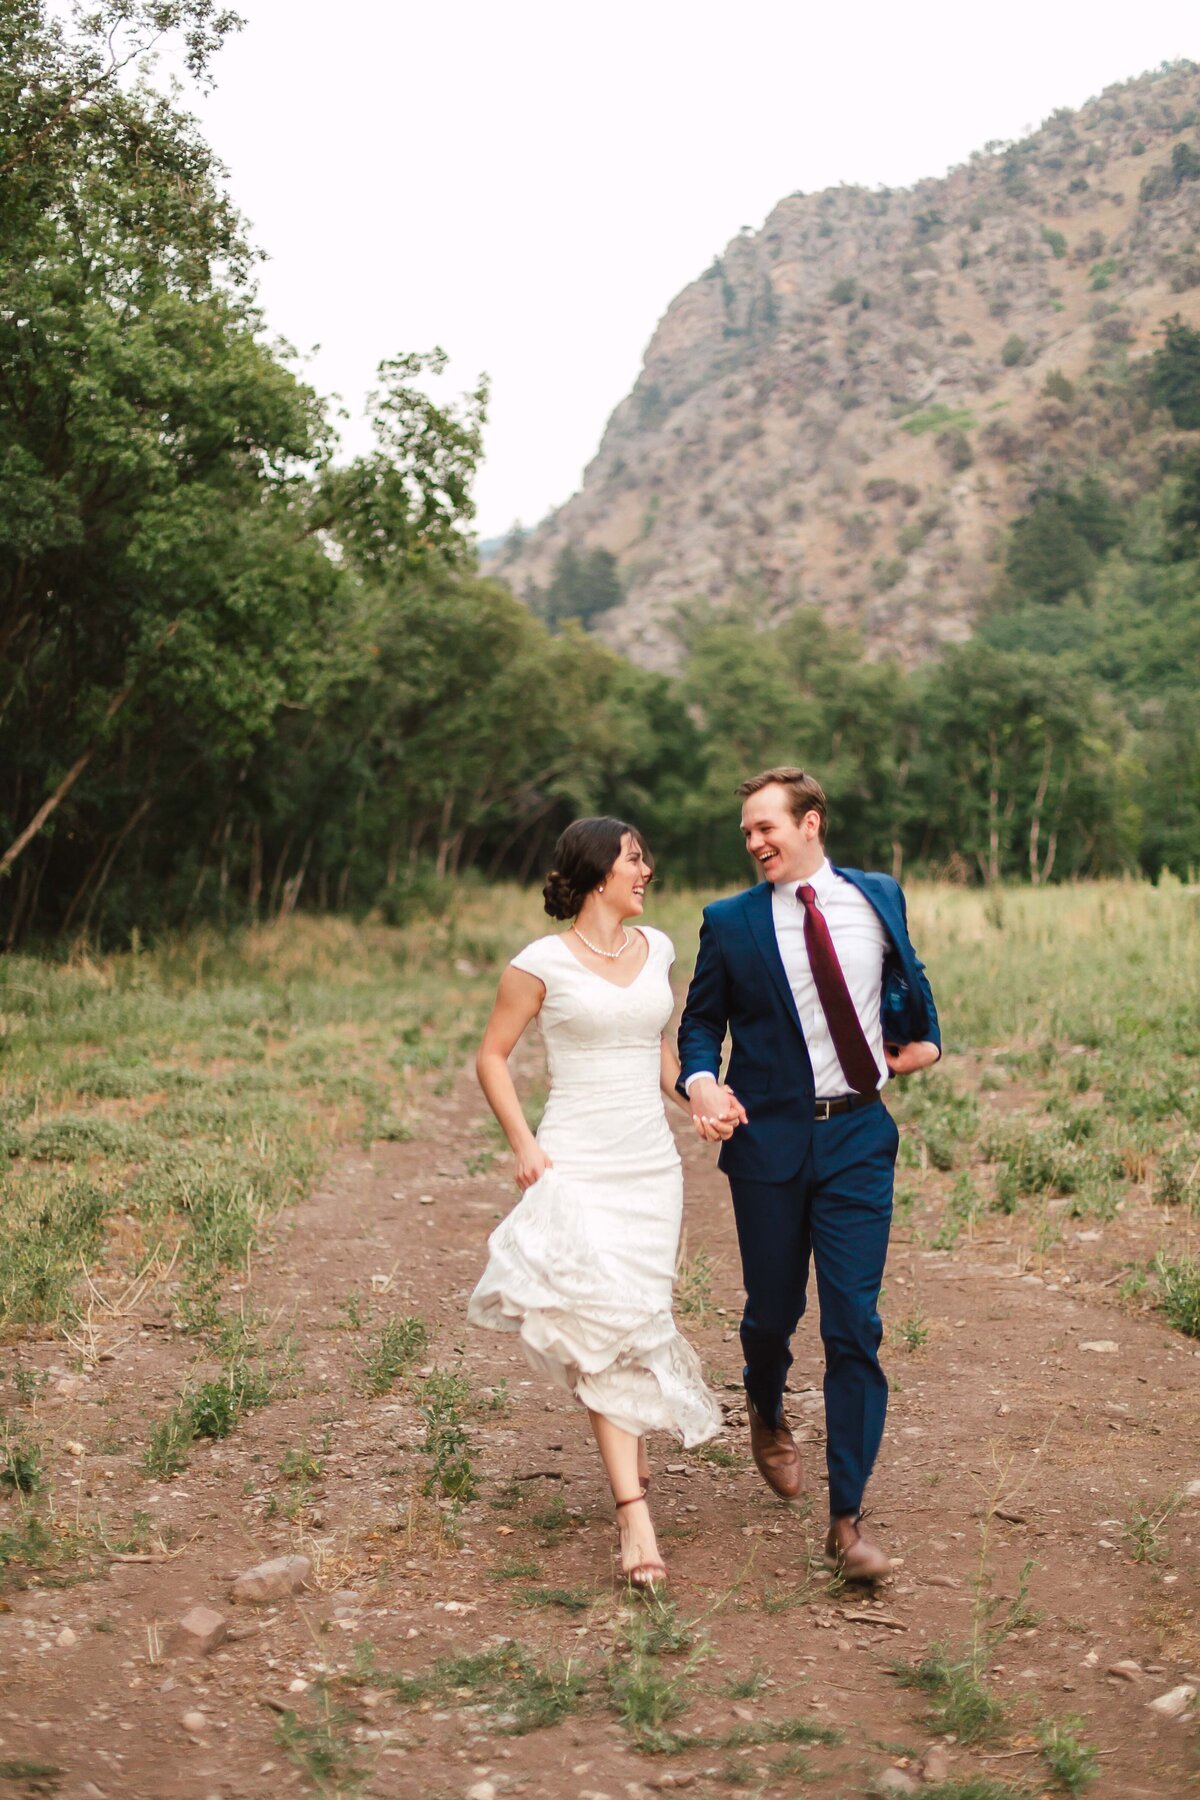 Bride and groom running together in photo at Cherry Peak Ski Resort in Utah by Utah Wedding Photographer